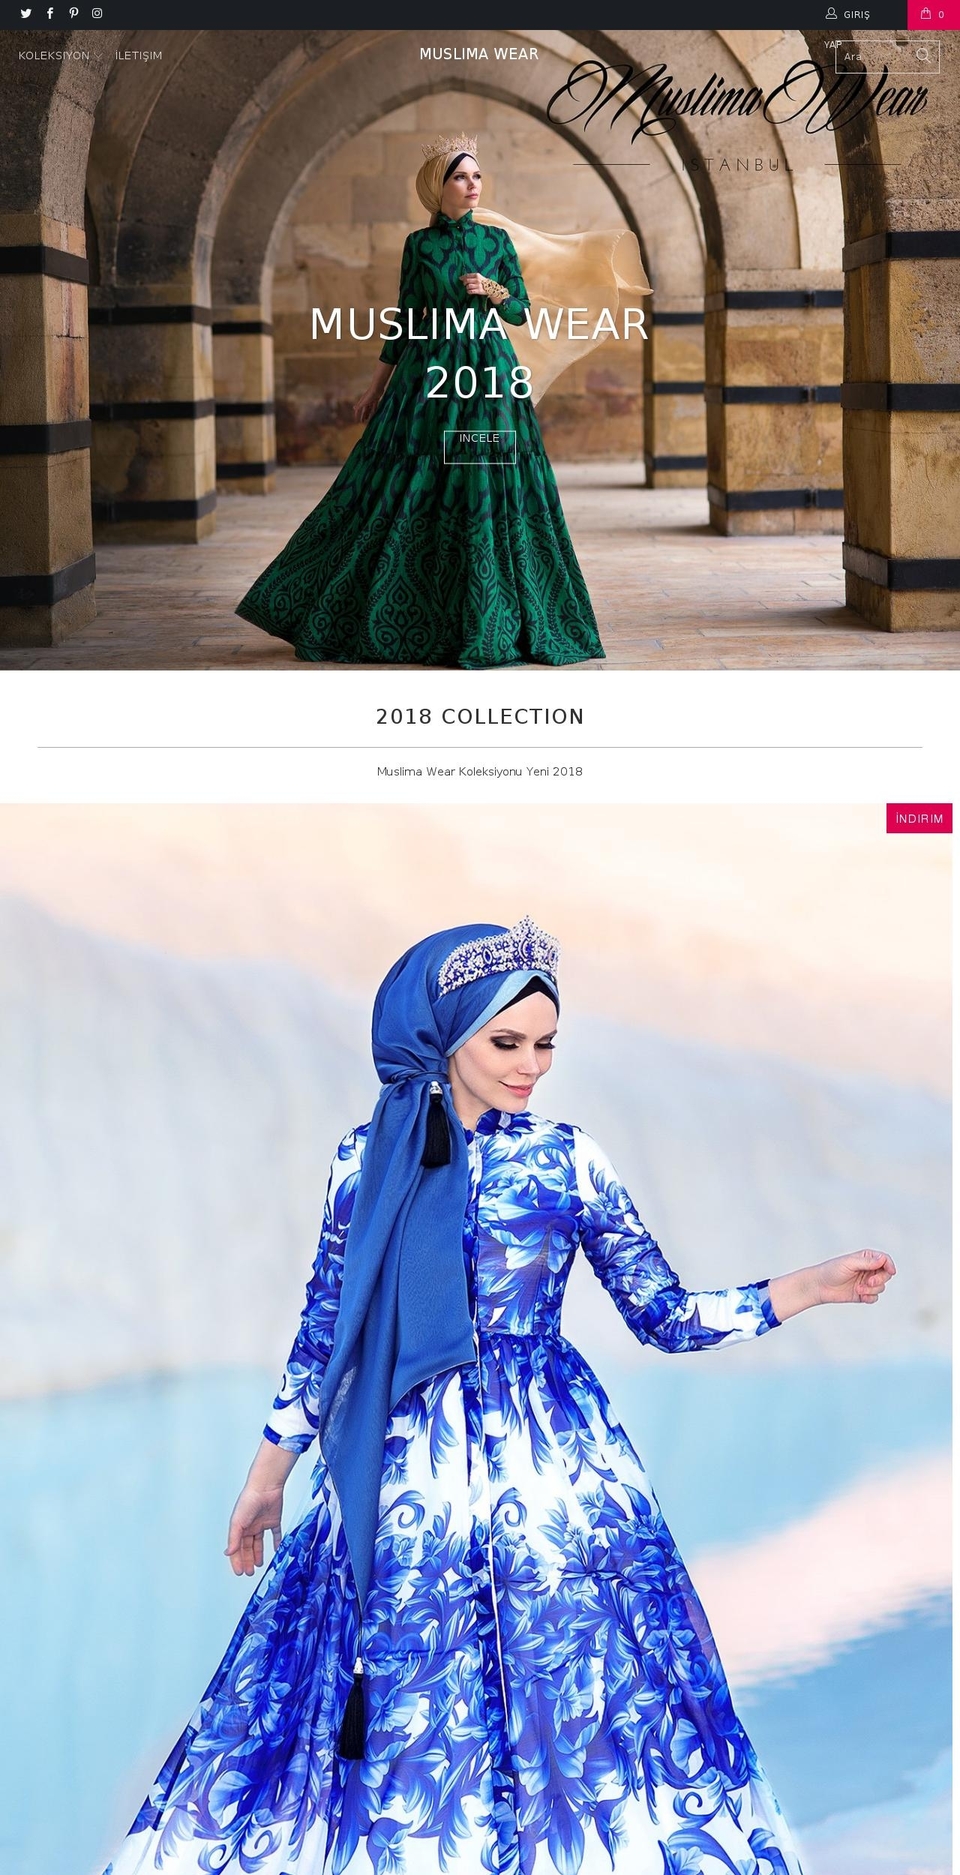 MuslimaWear TR original Shopify theme site example muslimawear.com.tr